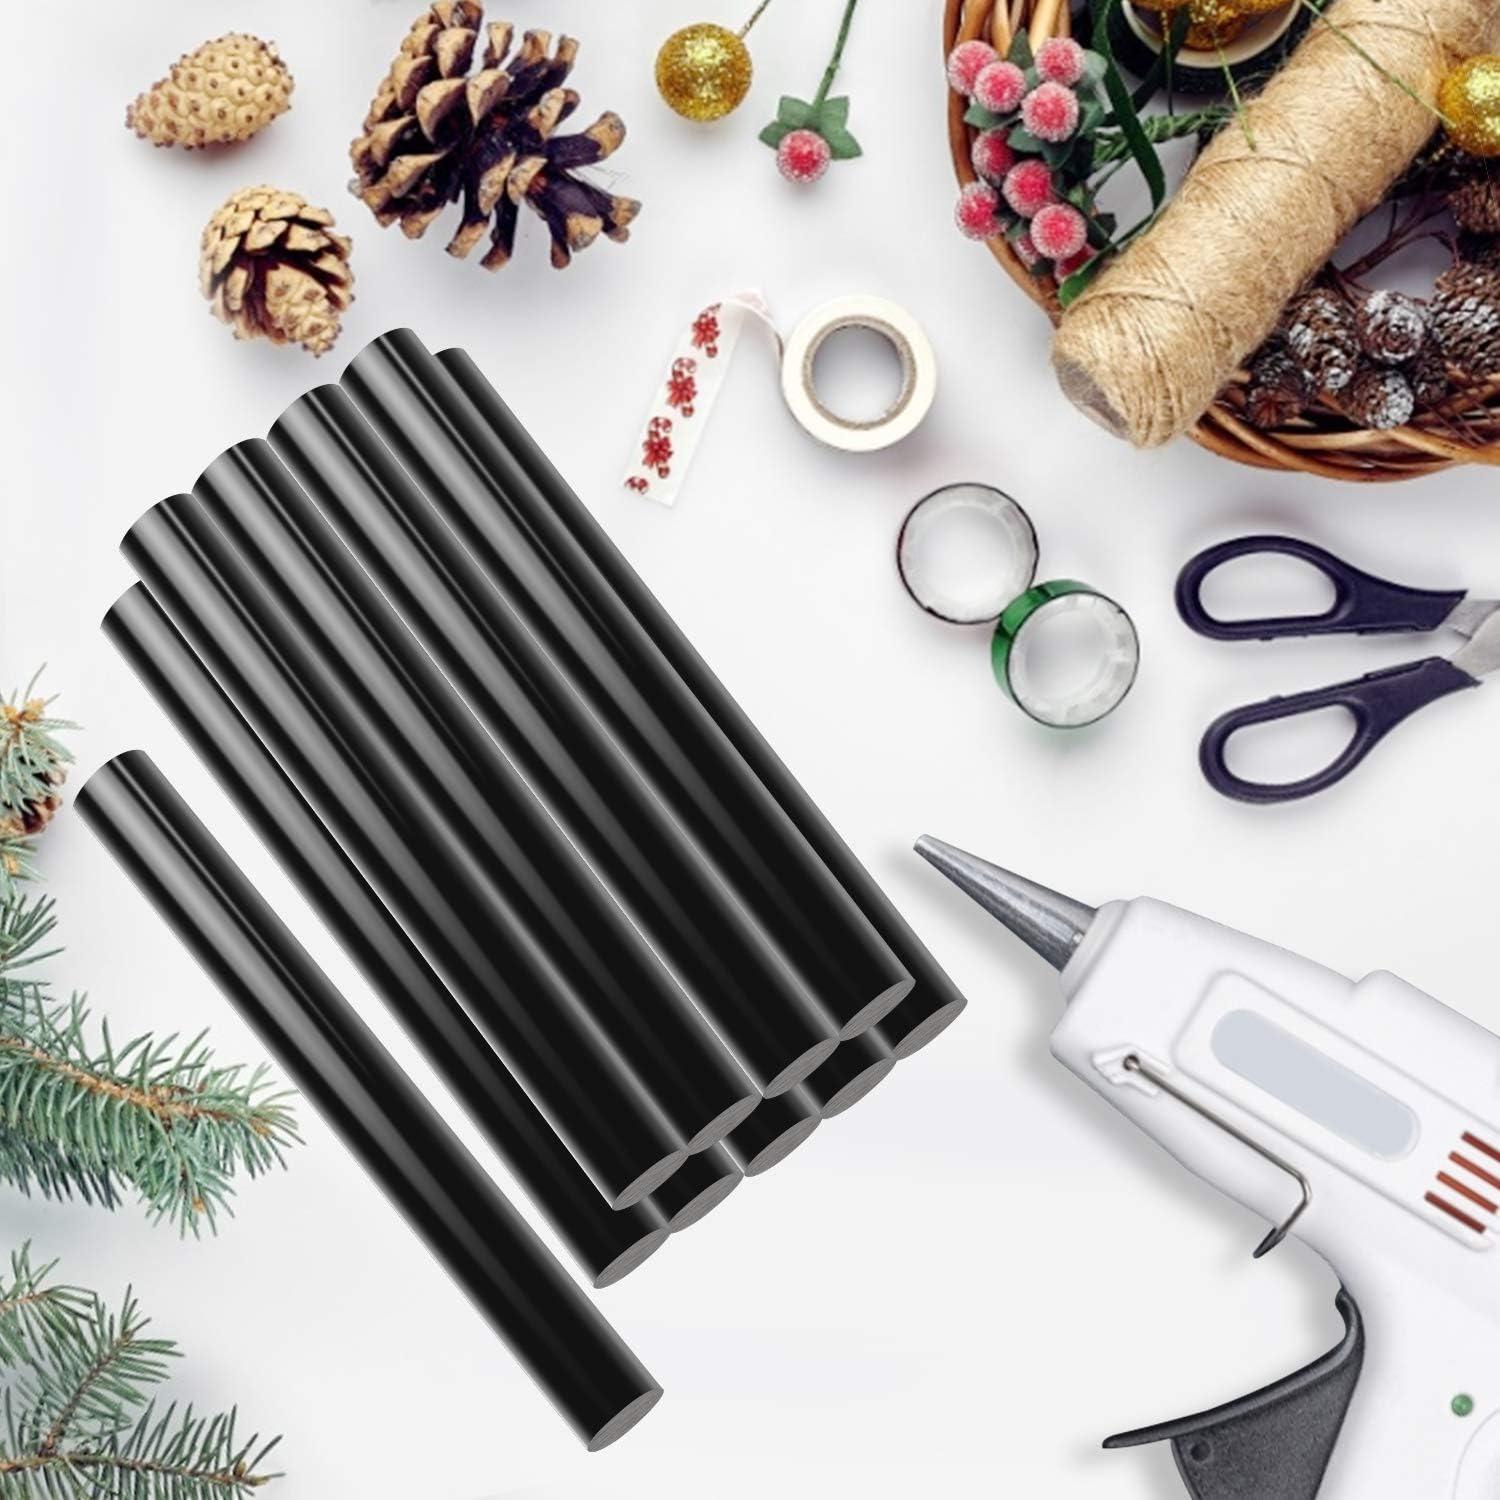  Gartful Full Size Hot Glue Sticks - 0.43 x 3.9, Black Hot  Glue Gun Sticks, Large Hot Melt Glue Sticks for Wax Sealing, DIY Craft,  General Repair, Gluing Project, Christmas Gift